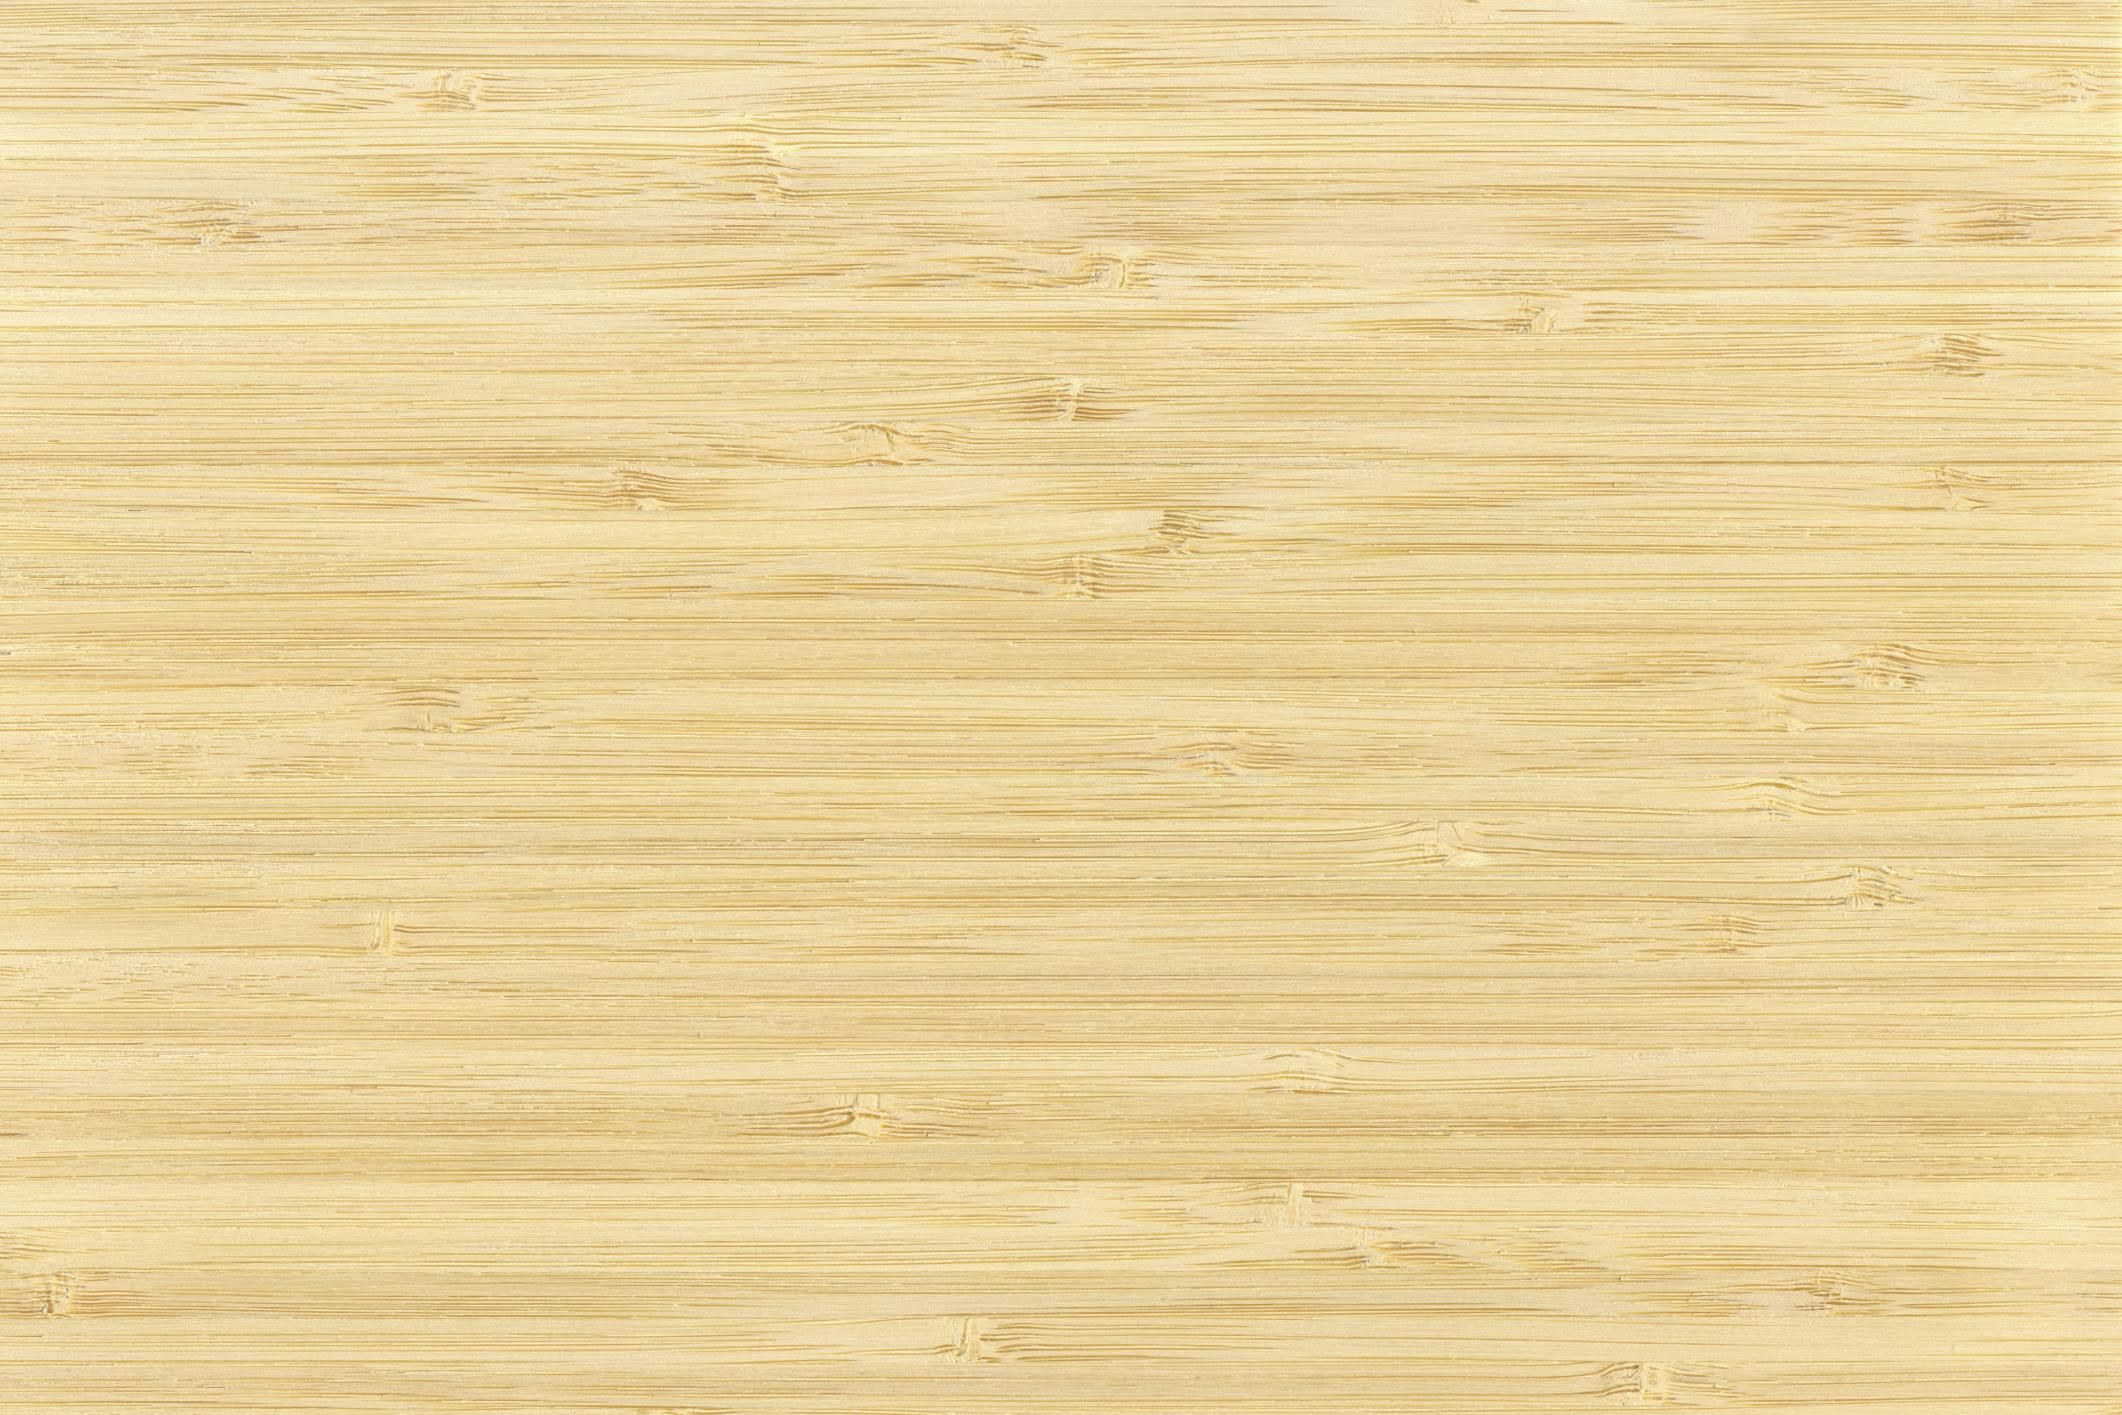 engineered hardwood flooring in bathrooms of bamboo flooring in a bathroom things to consider regarding 182740579 56a2fd883df78cf7727b6d14